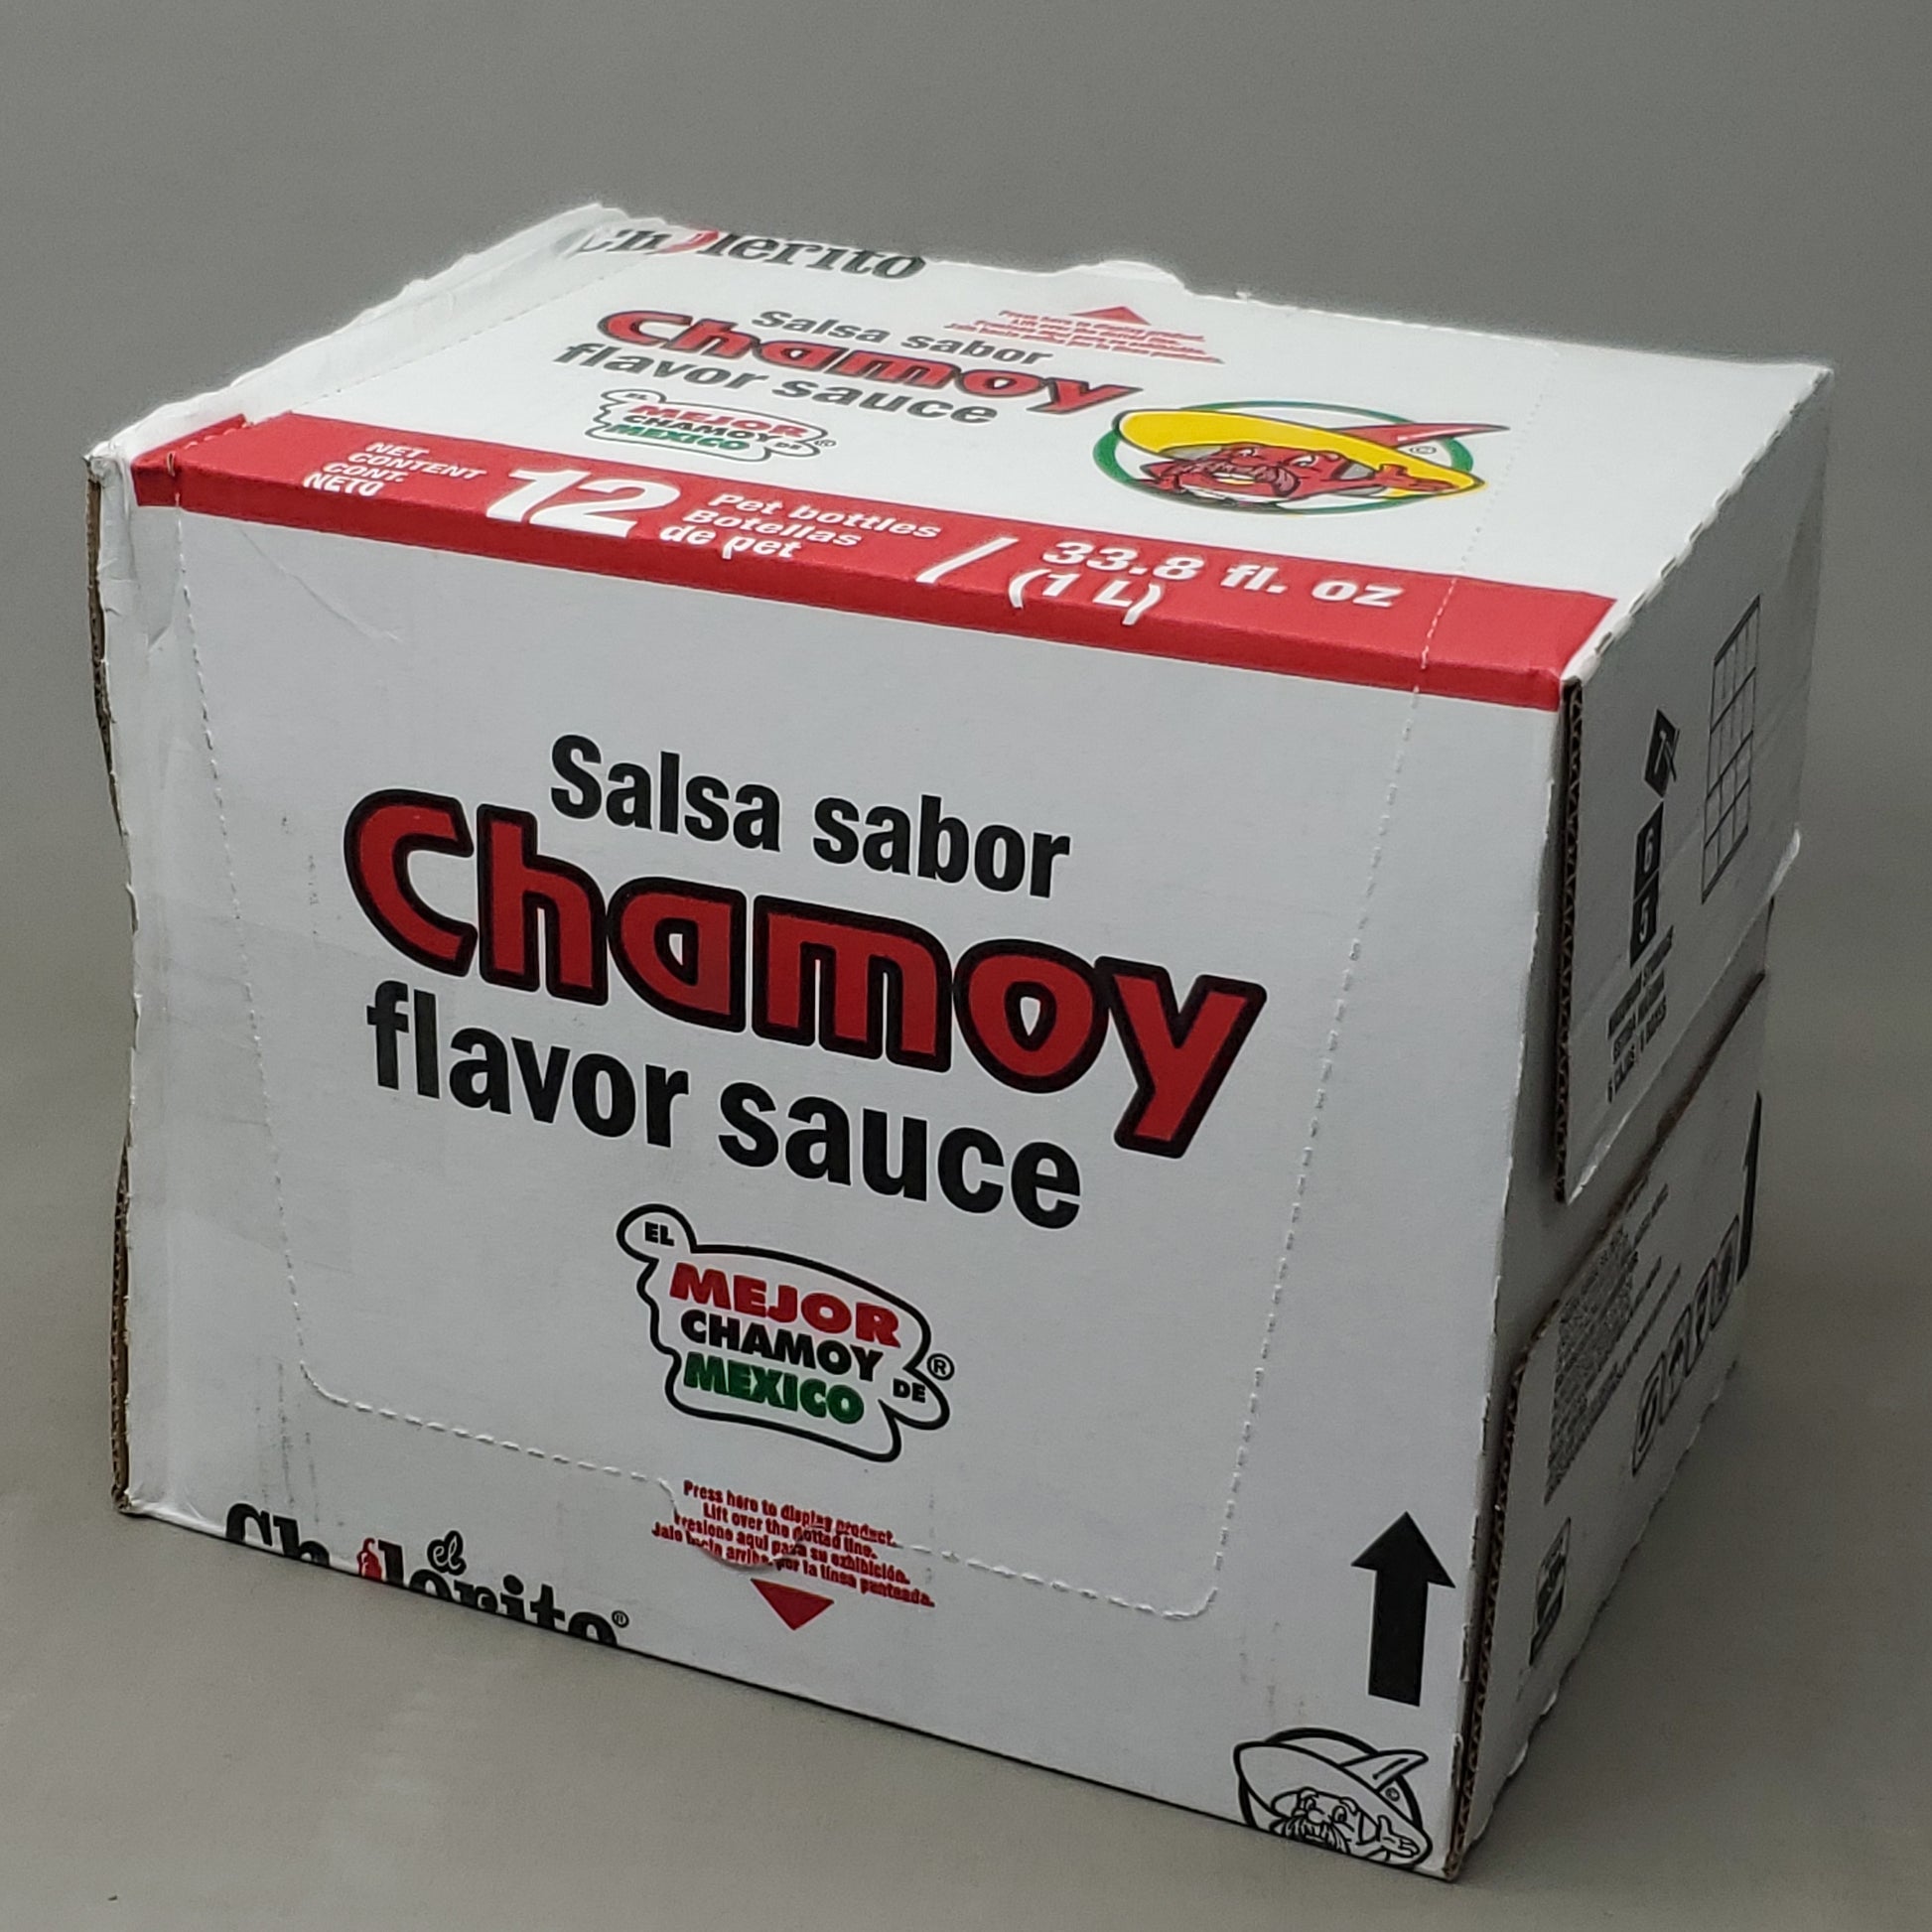 El Chilerito Chamoy 33.8 Fl. Oz (Pack of 1)